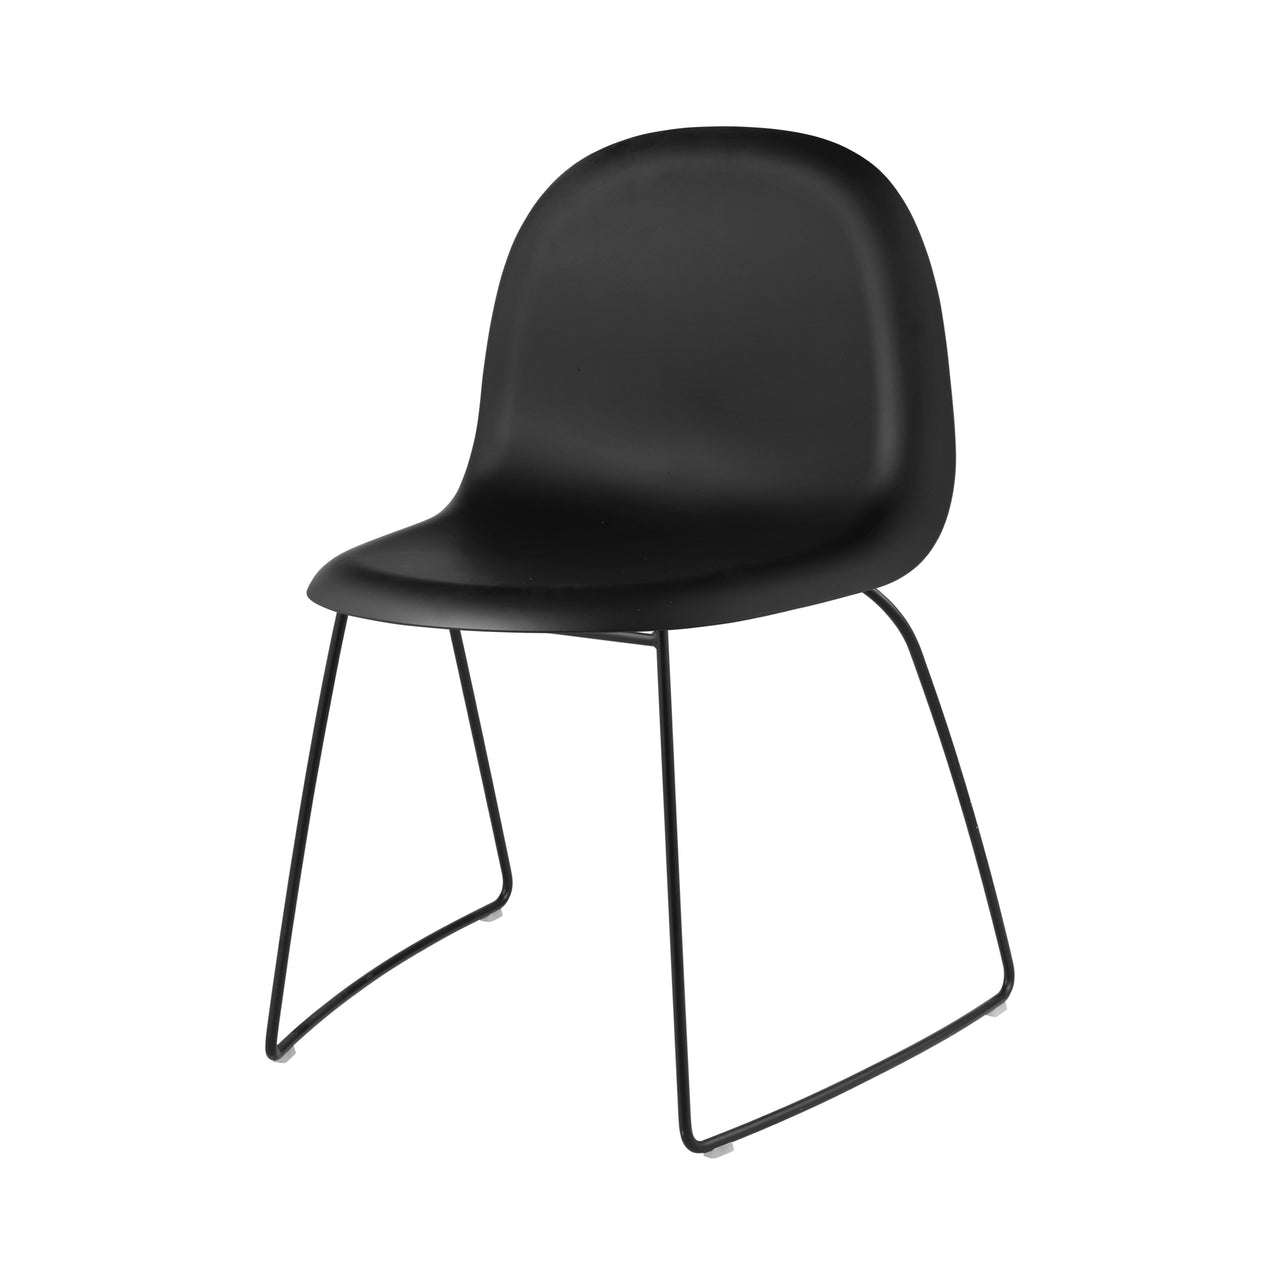 3D Dining Chair: Plastic Shell + Sledge Base + Black Semi Matt + Plastic Glides